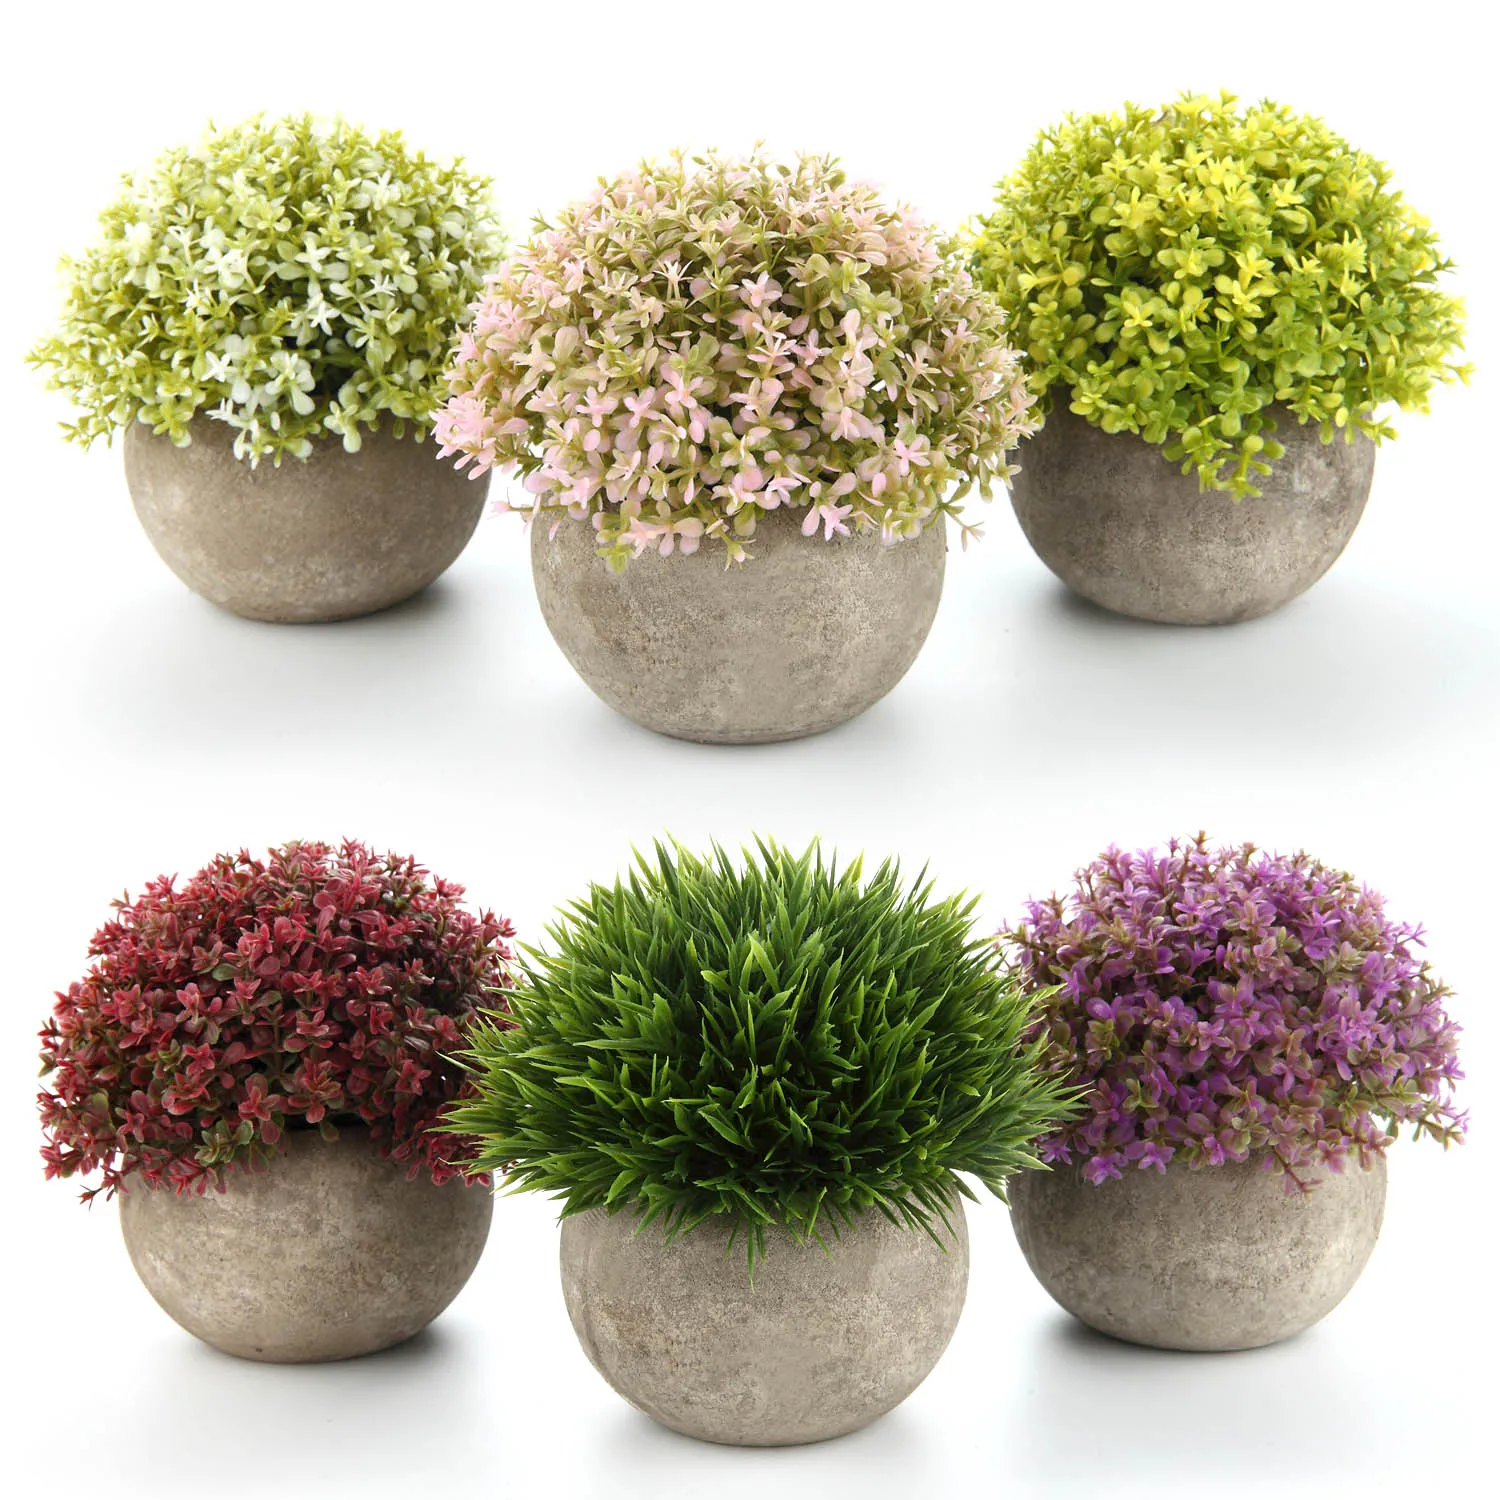 

T4U plantas artificiais flower in pots Potted Grass Plants Home and Office Decoration Desktop Windowsill Bonsai Indoor Gift